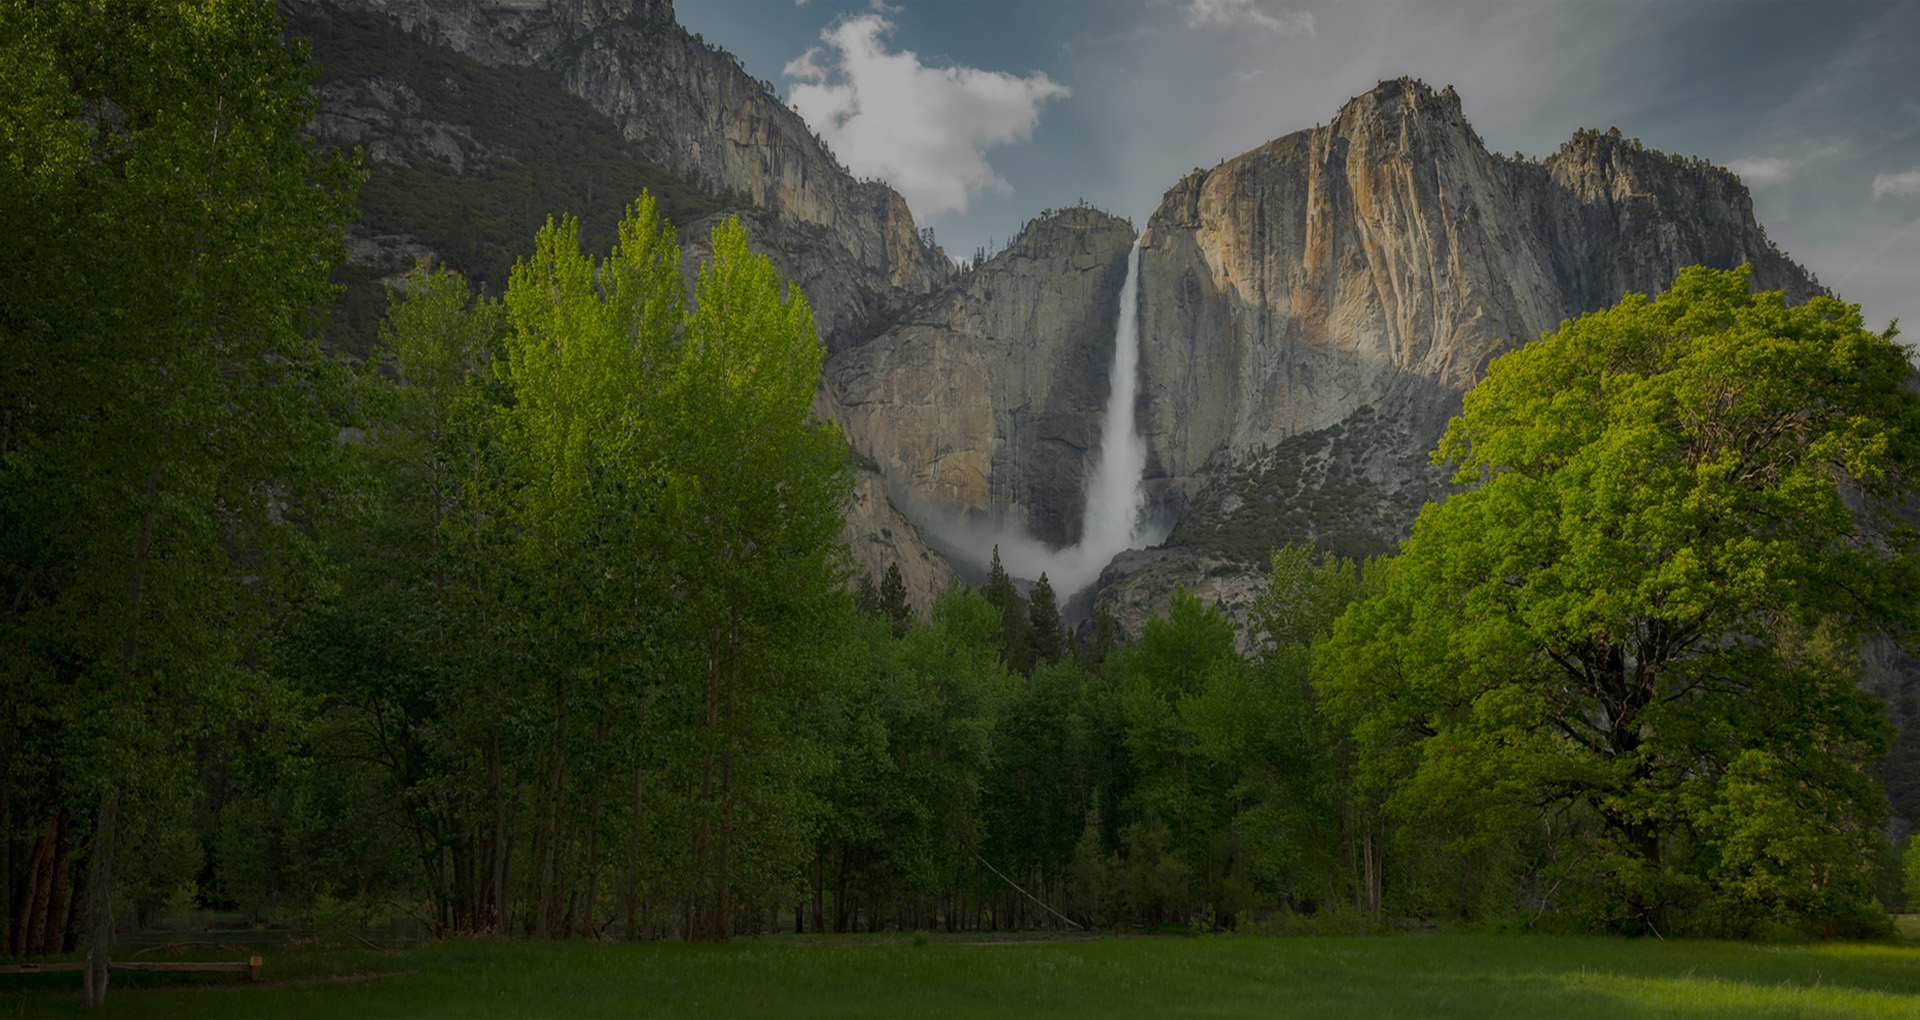 The image shows a Yosemite National Park, USA.